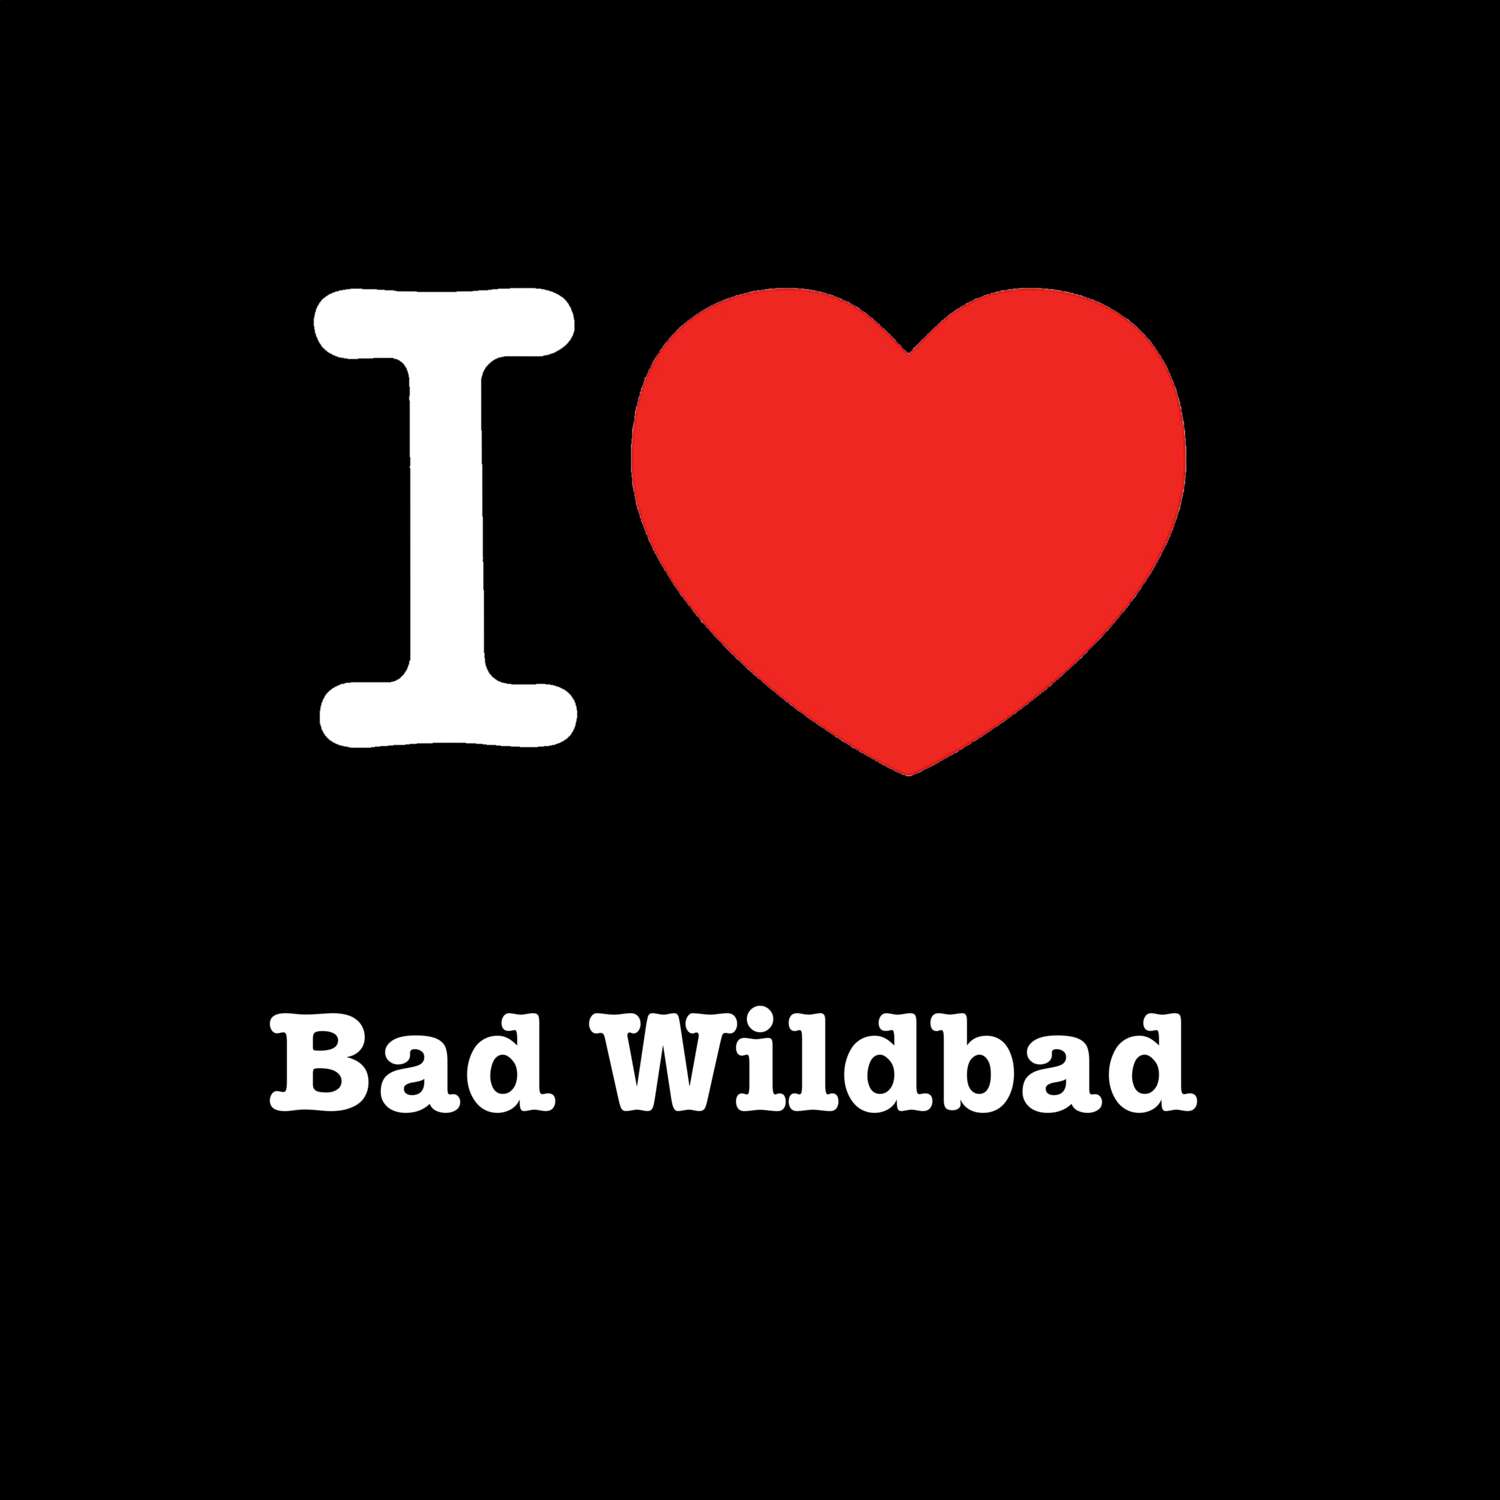 Bad Wildbad T-Shirt »I love«